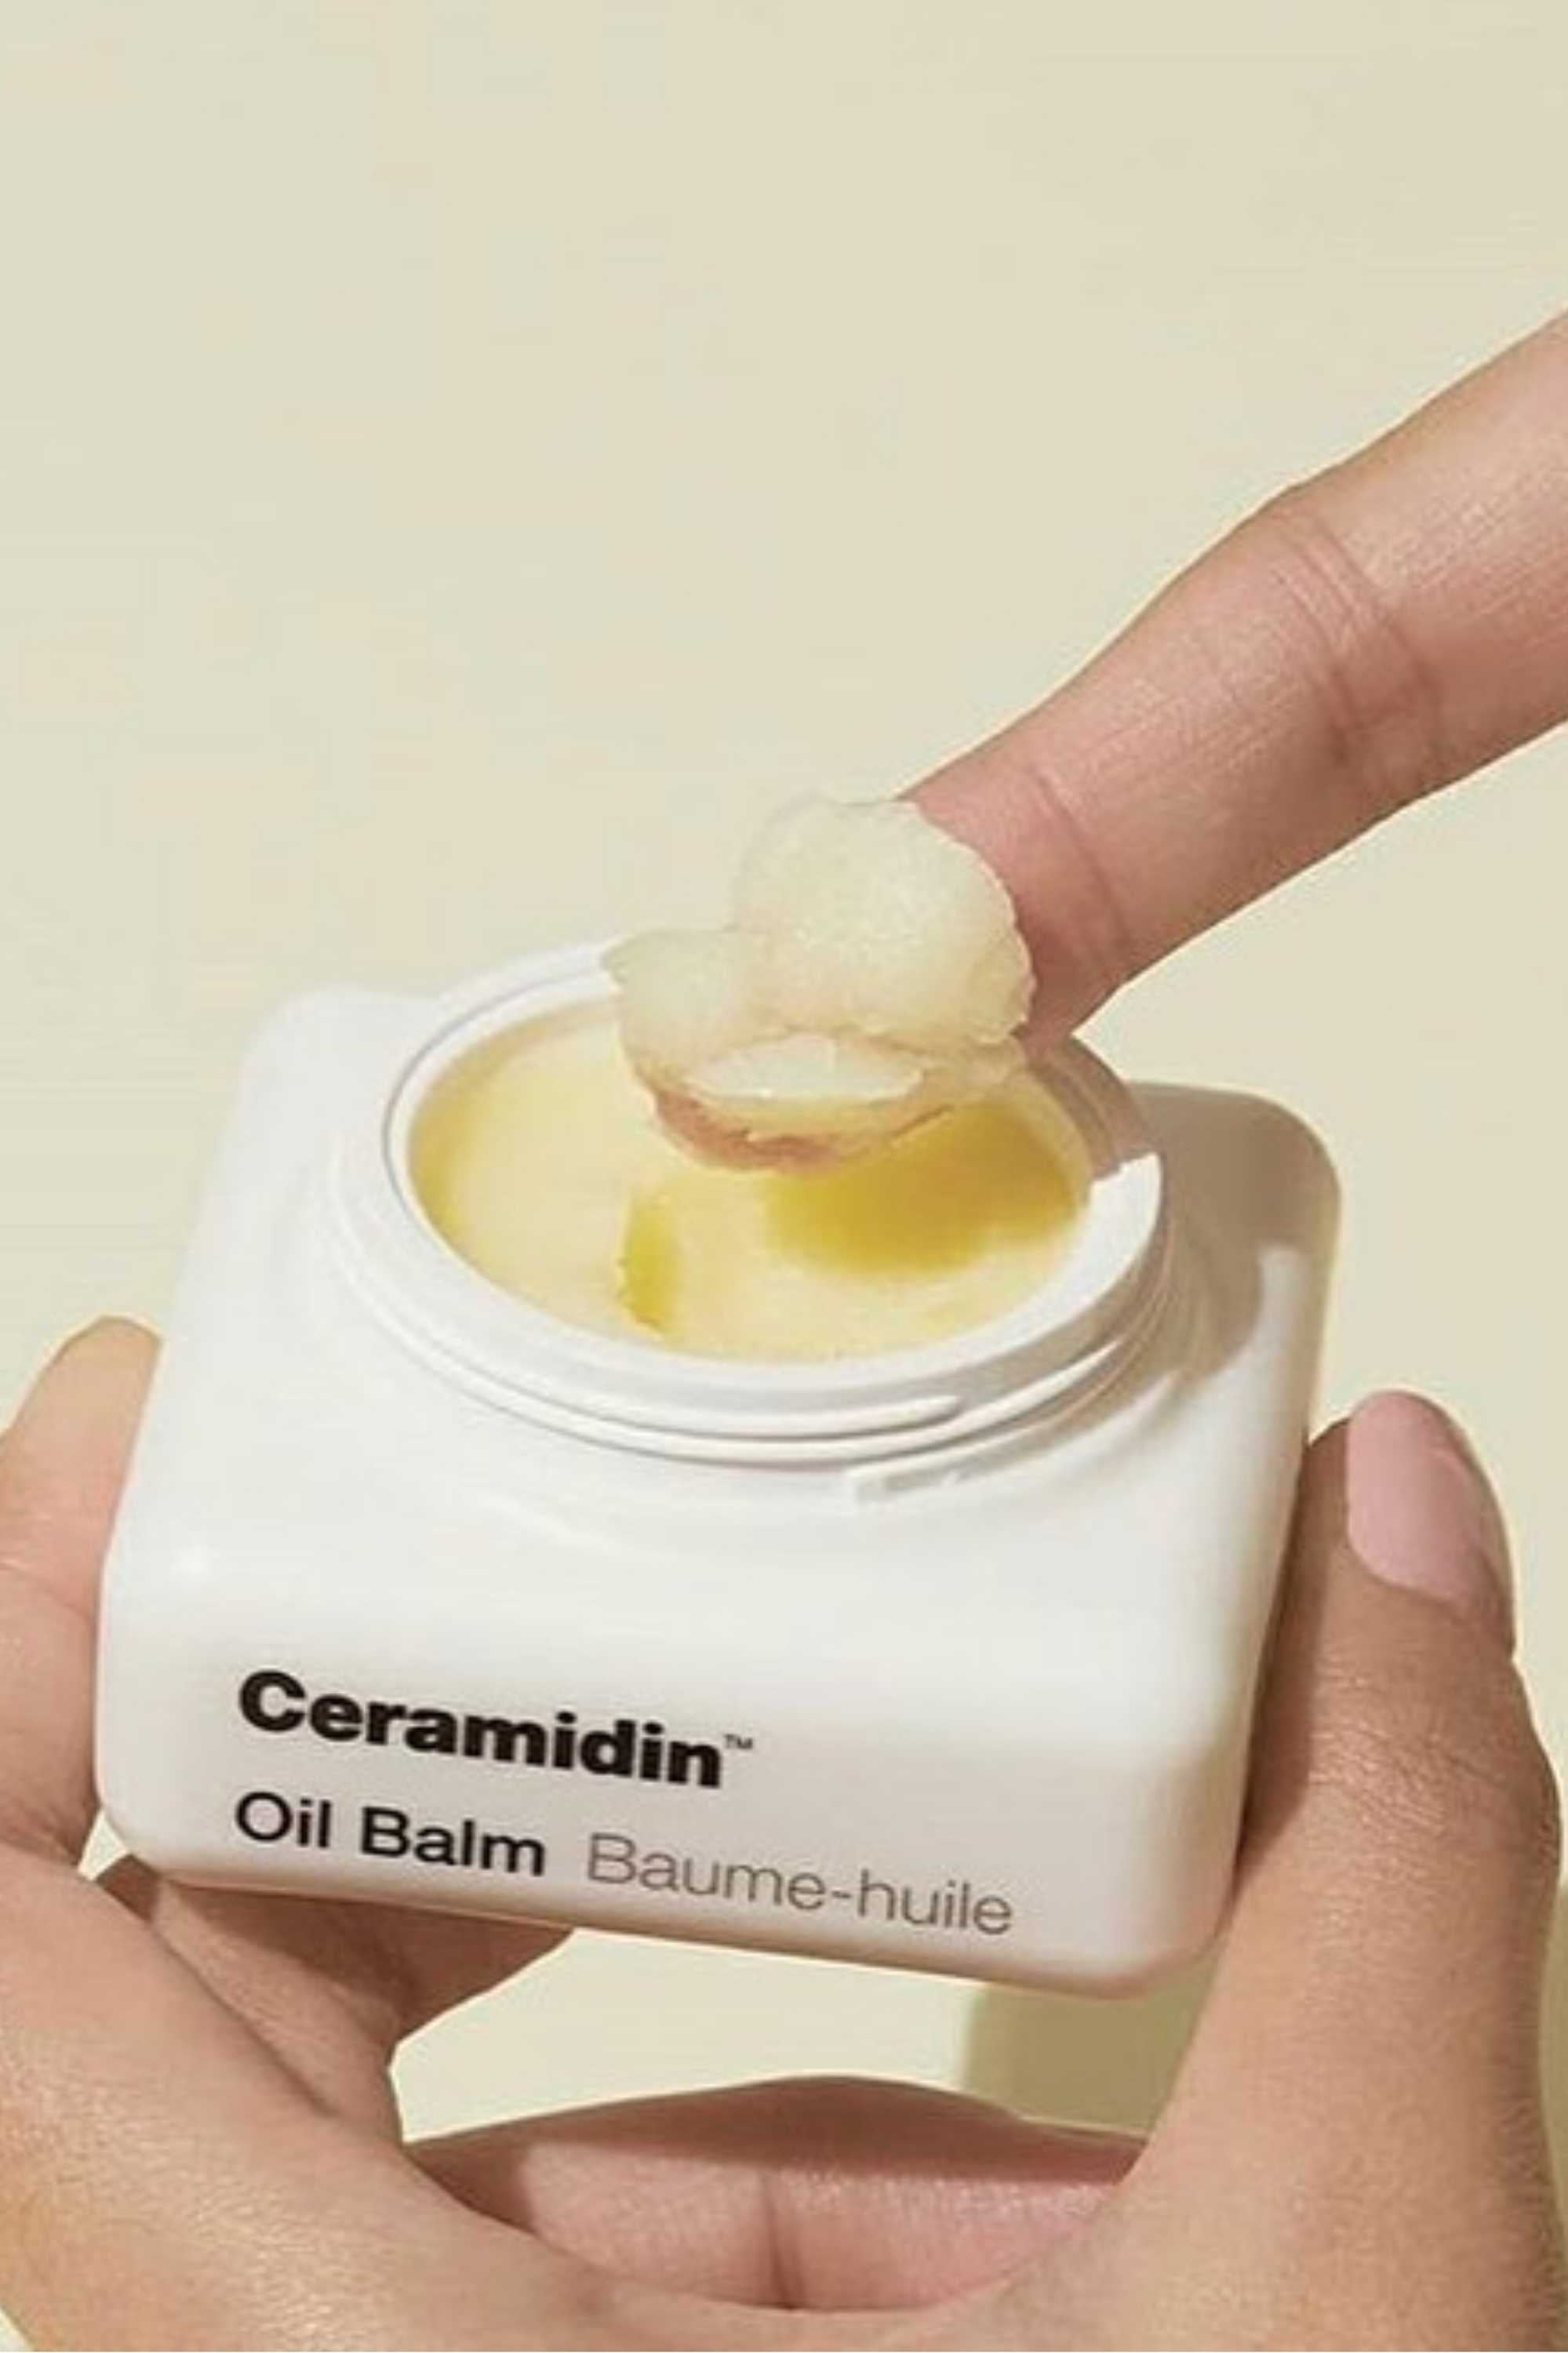 Dr. Jart+ Ceramidin Cream: An Eczema Skincare Win